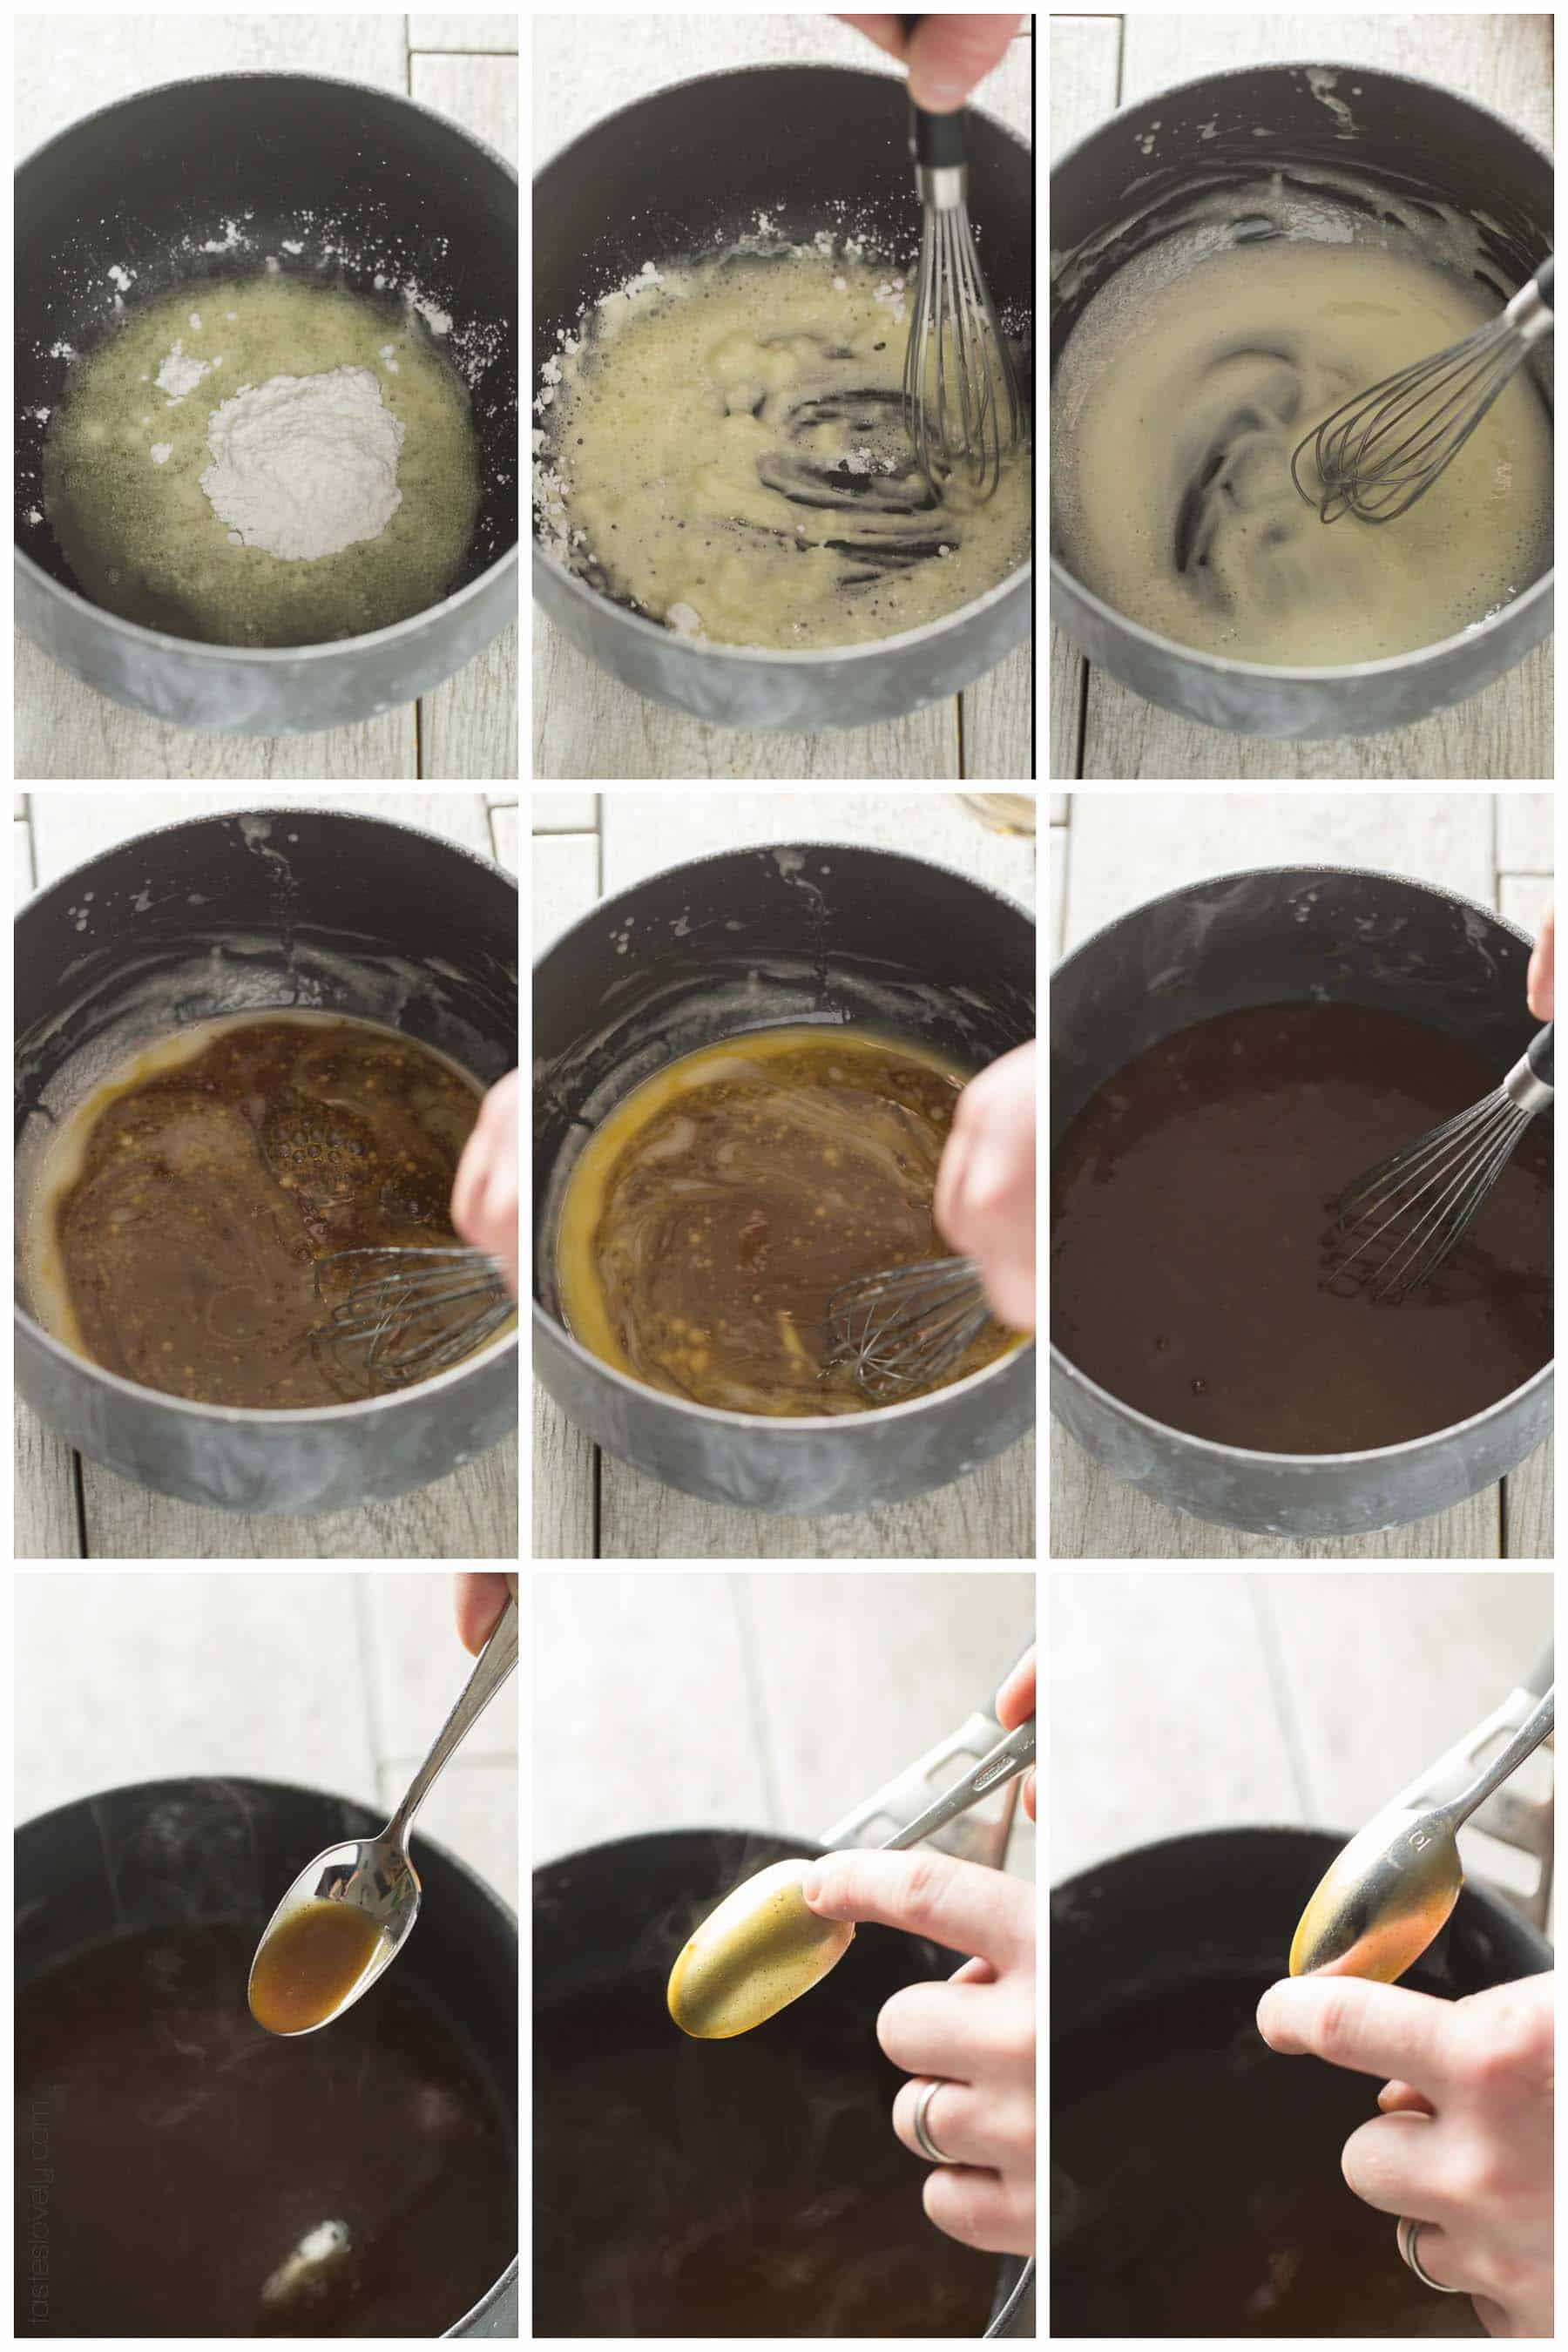 nine quadrants showing how to make gravy